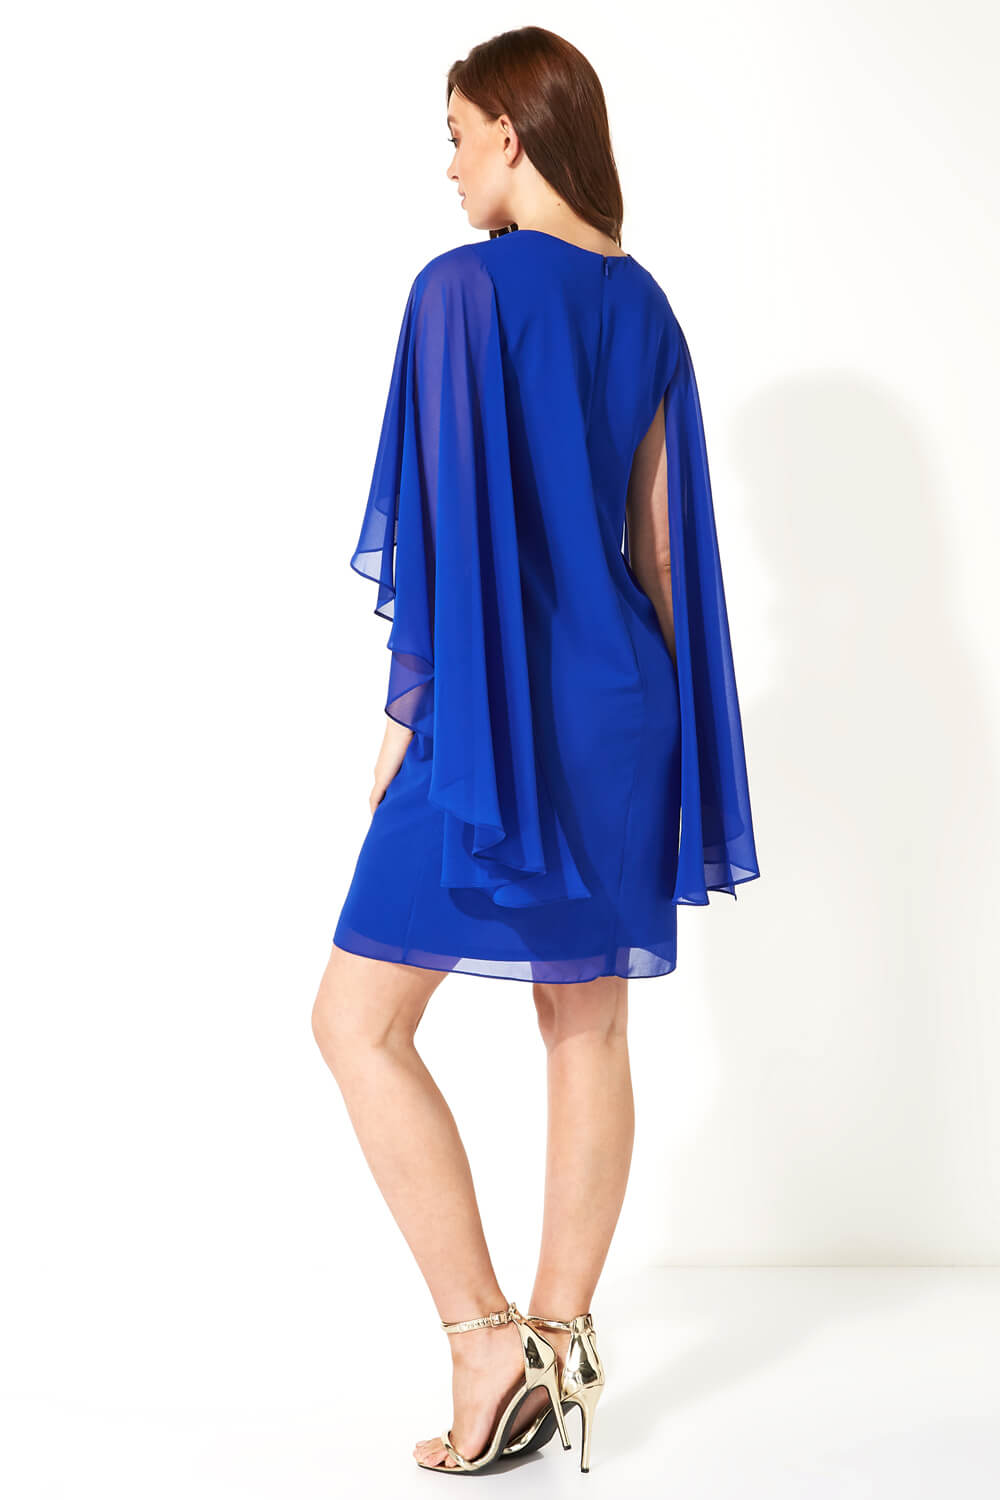 Chiffon Cape Sleeve Dress in Royal Blue - Roman Originals UK